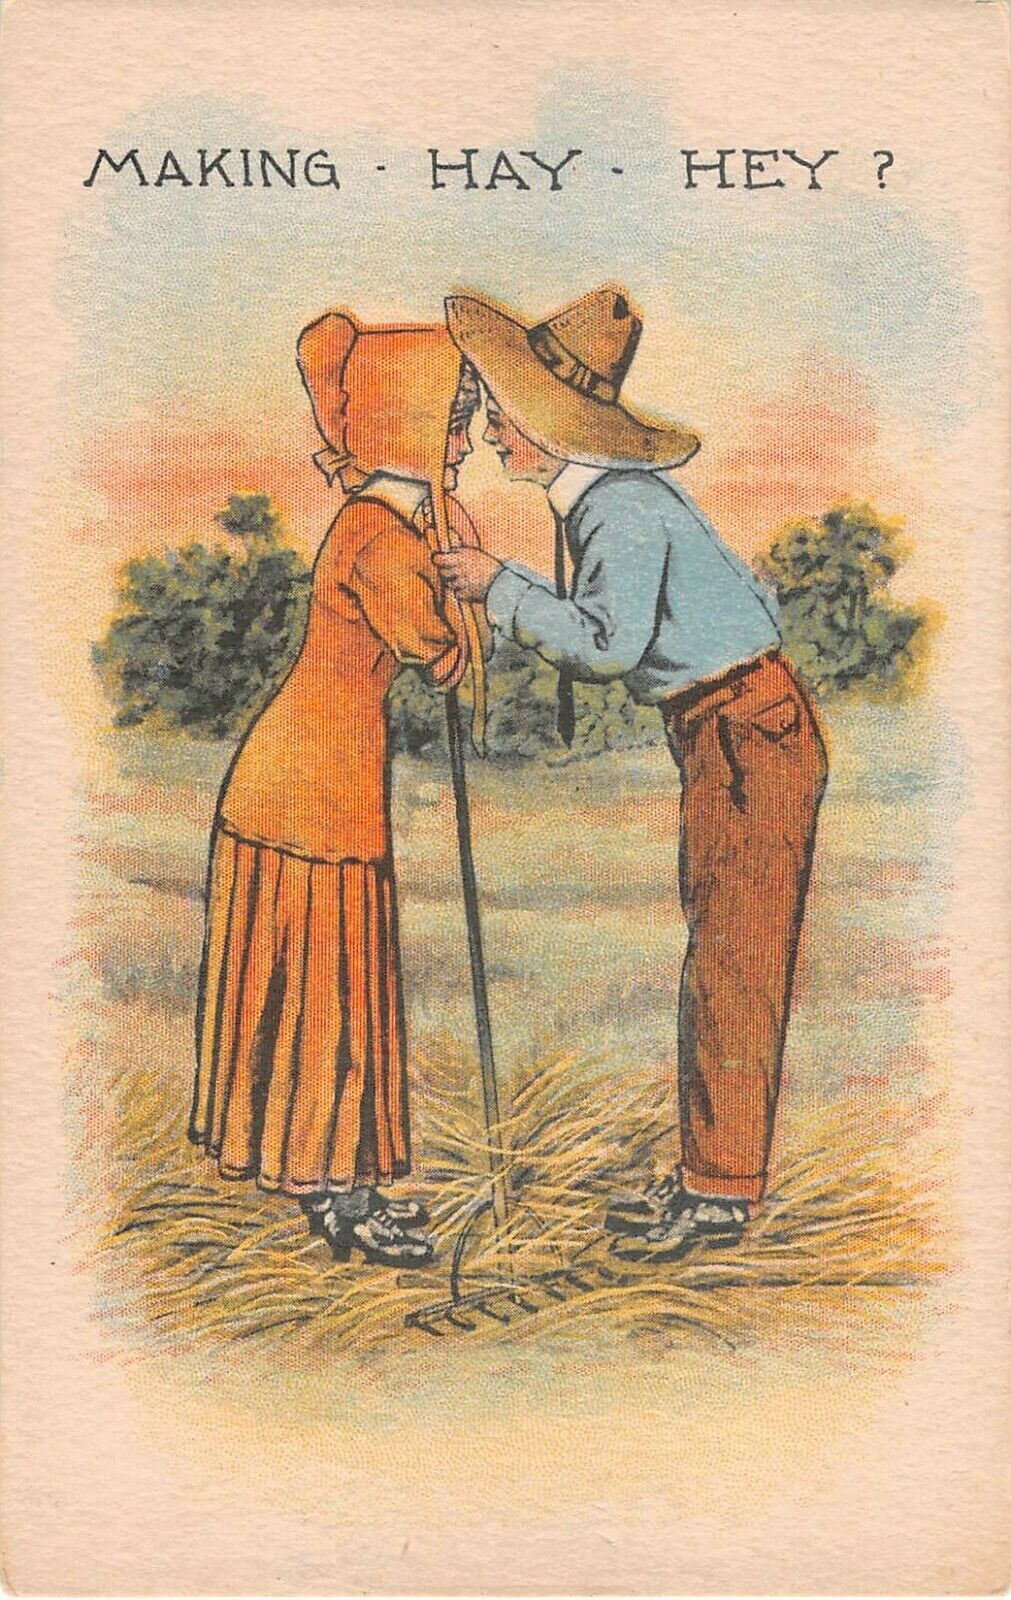 Farmer & Pretty Lady With Rake In Hay Field-old Comic Postcard-making Hay - Hey?